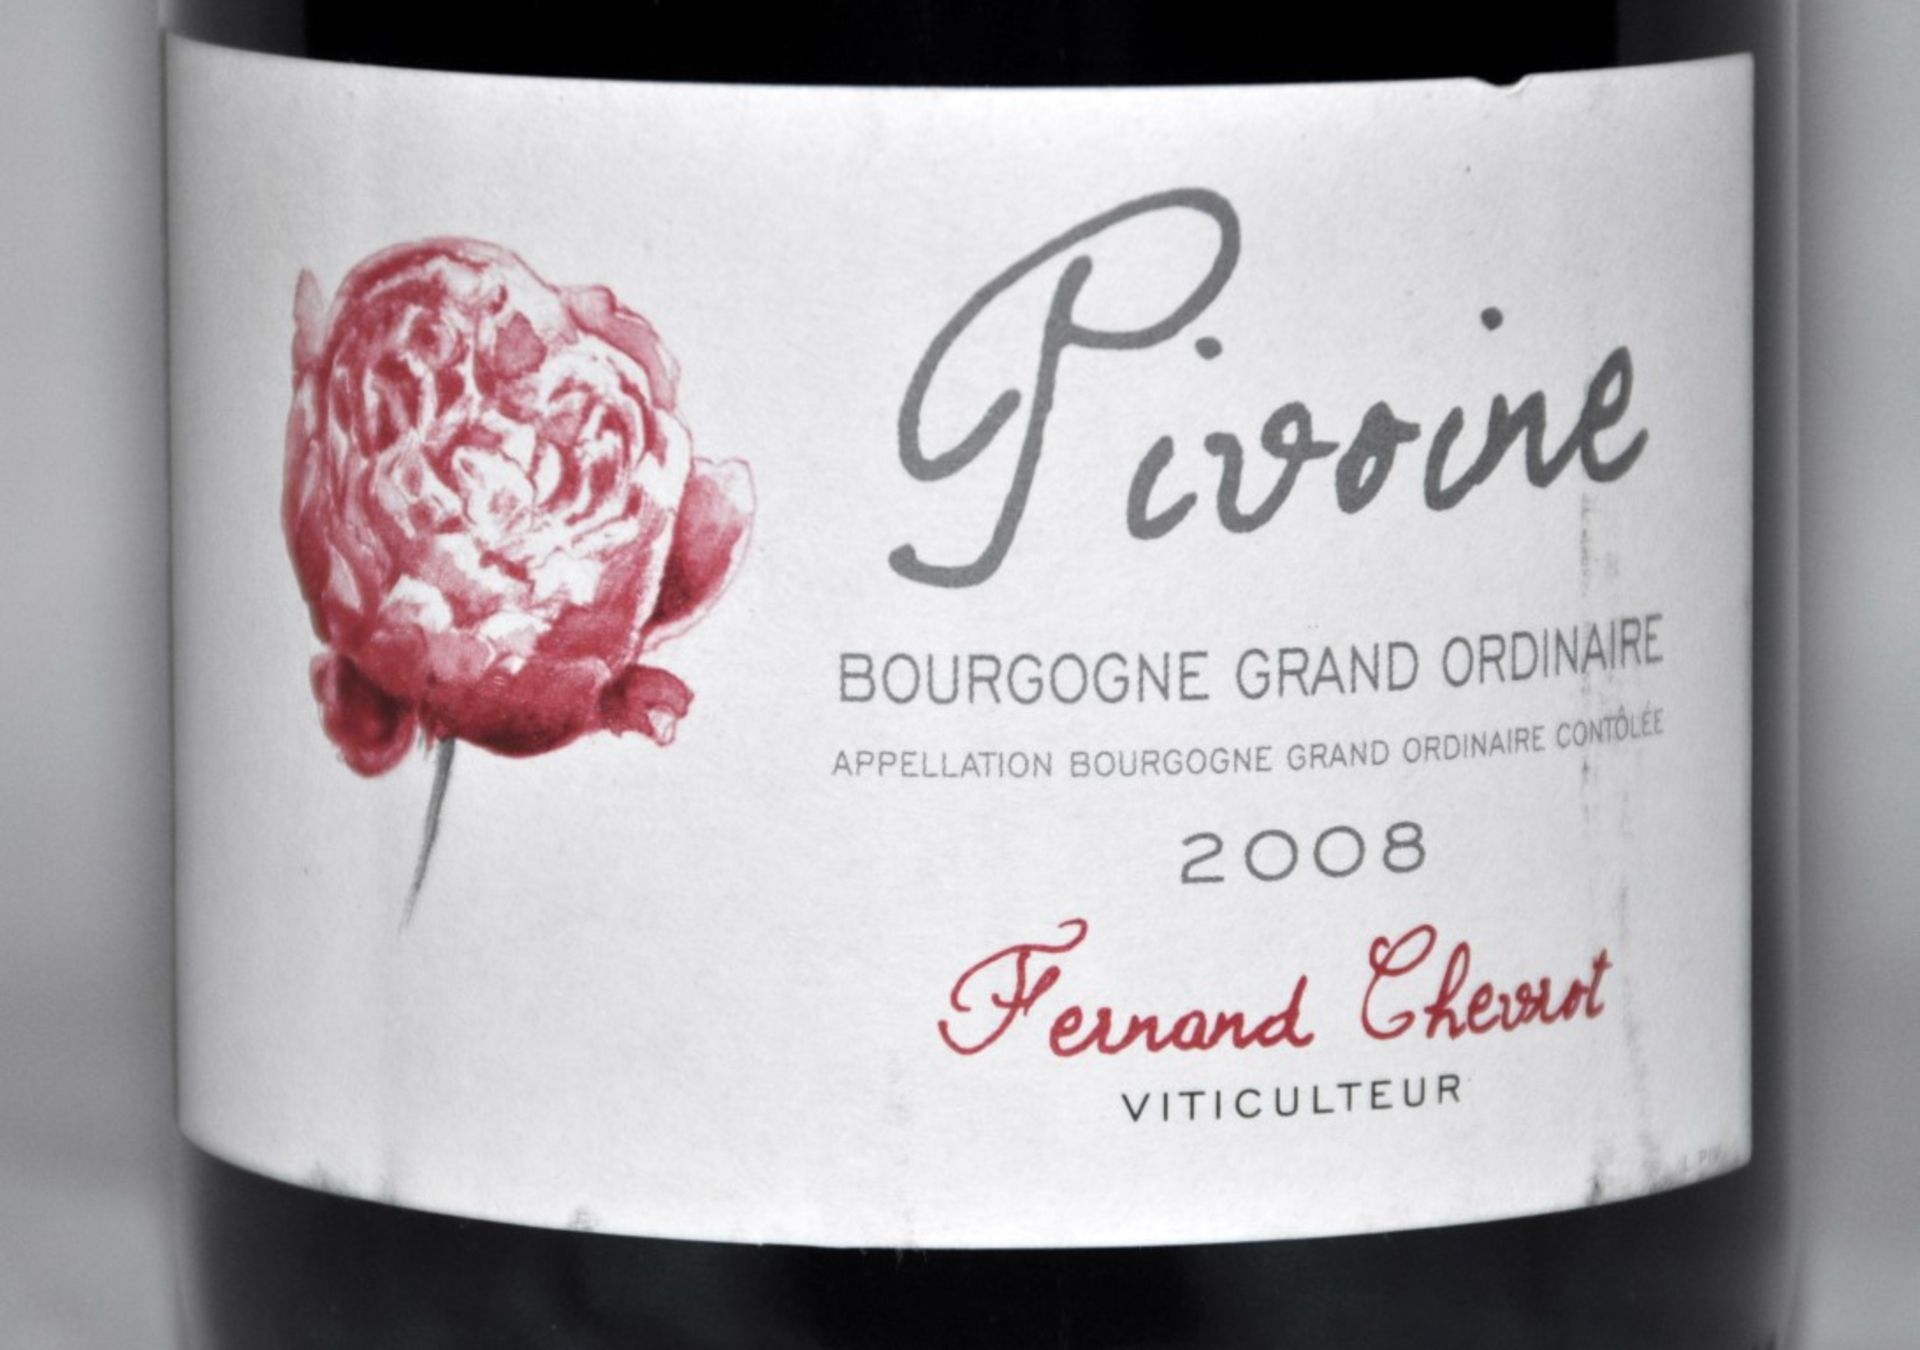 1 x Domaine Chevrot Pivoine Bourgogne Grand Ordinaire Red Wine - French Wine - Year 2008 - Bottle - Image 2 of 3